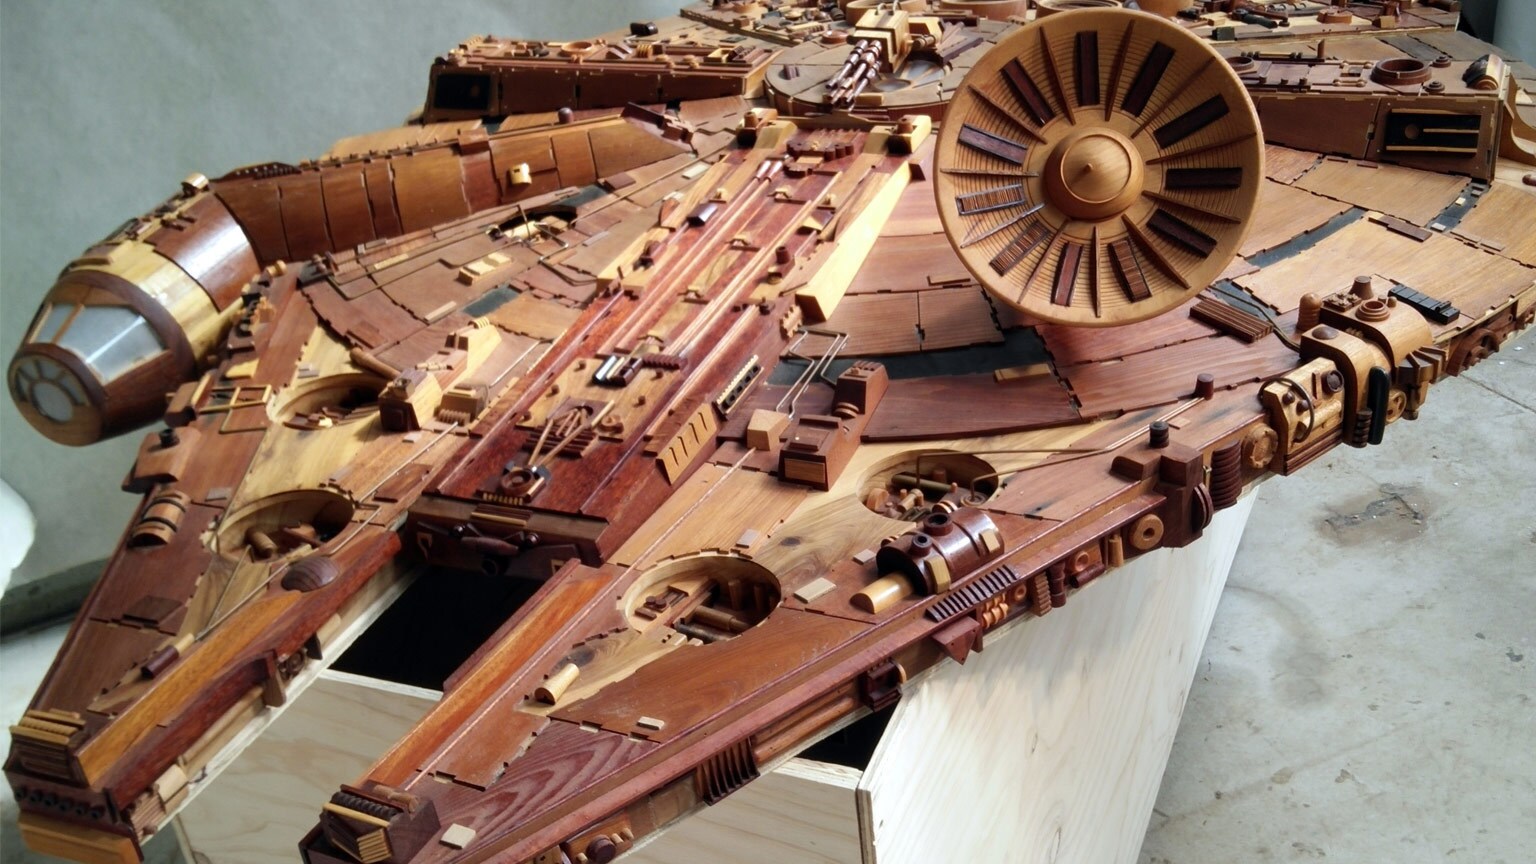 Most Impressive Fans: Martin Creaney's Incredible Wooden Millennium Falcon Sculpture